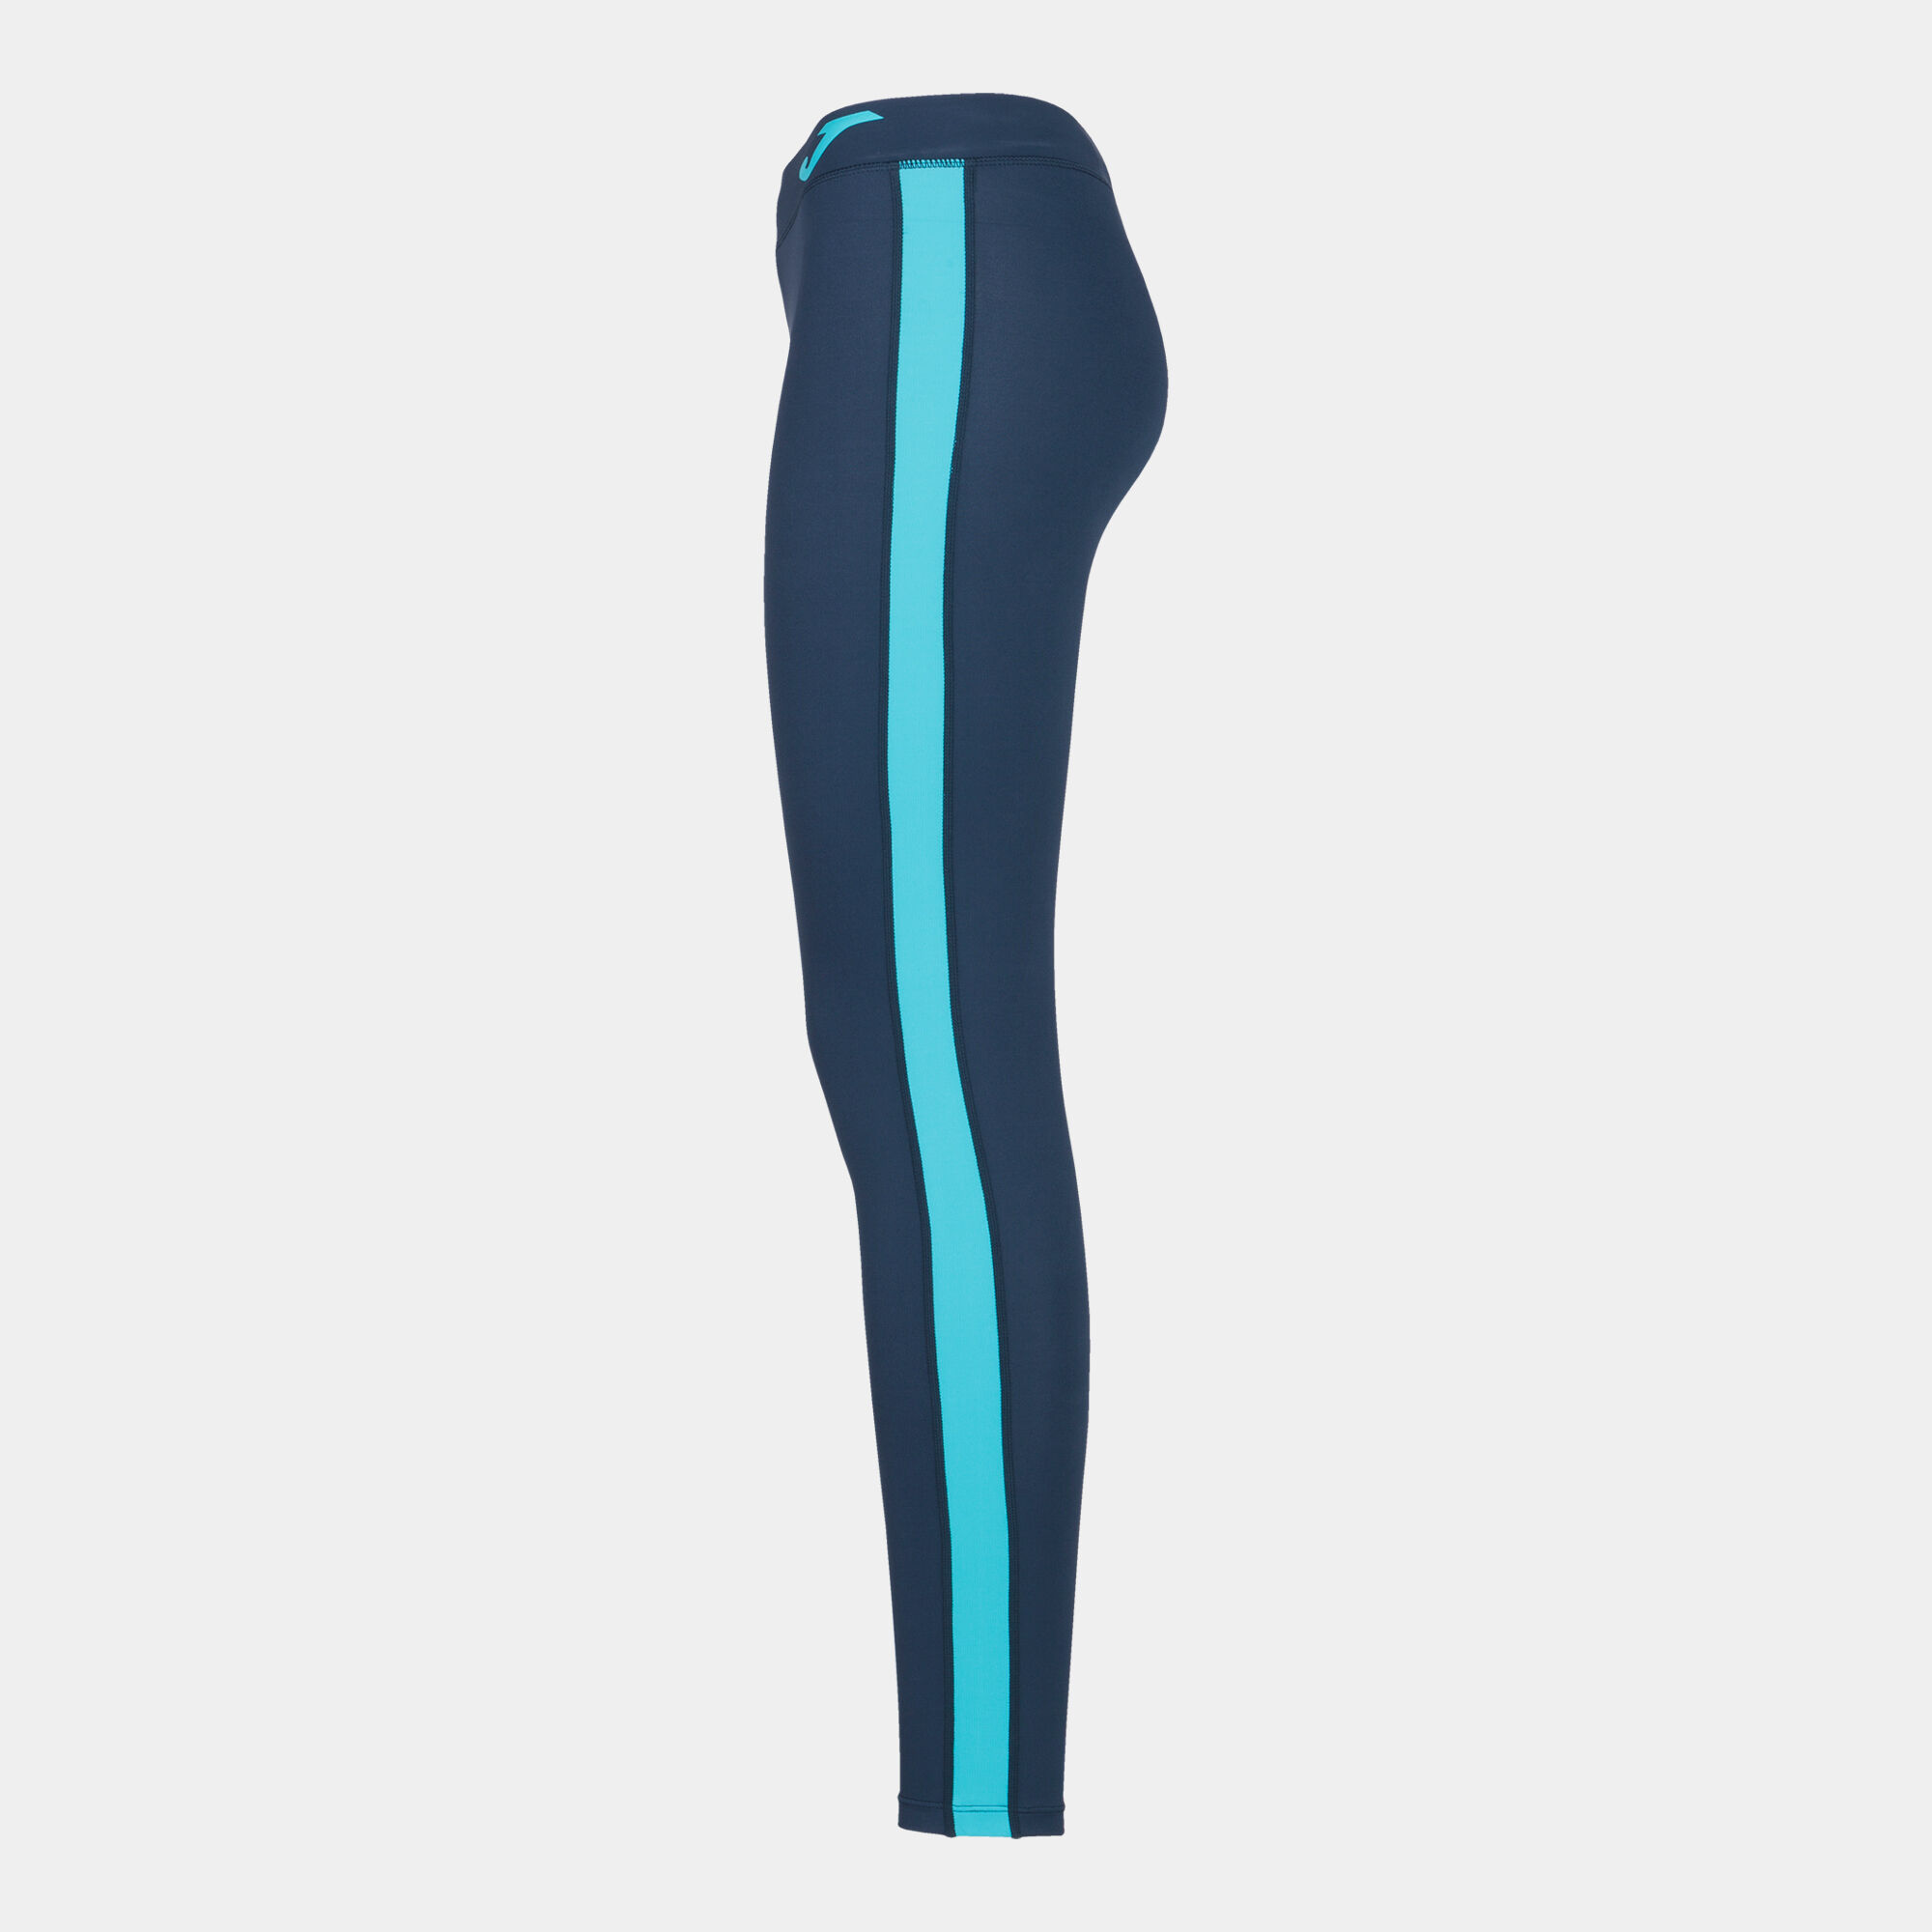 Legging long femme Ascona bleu marine turquoise fluo